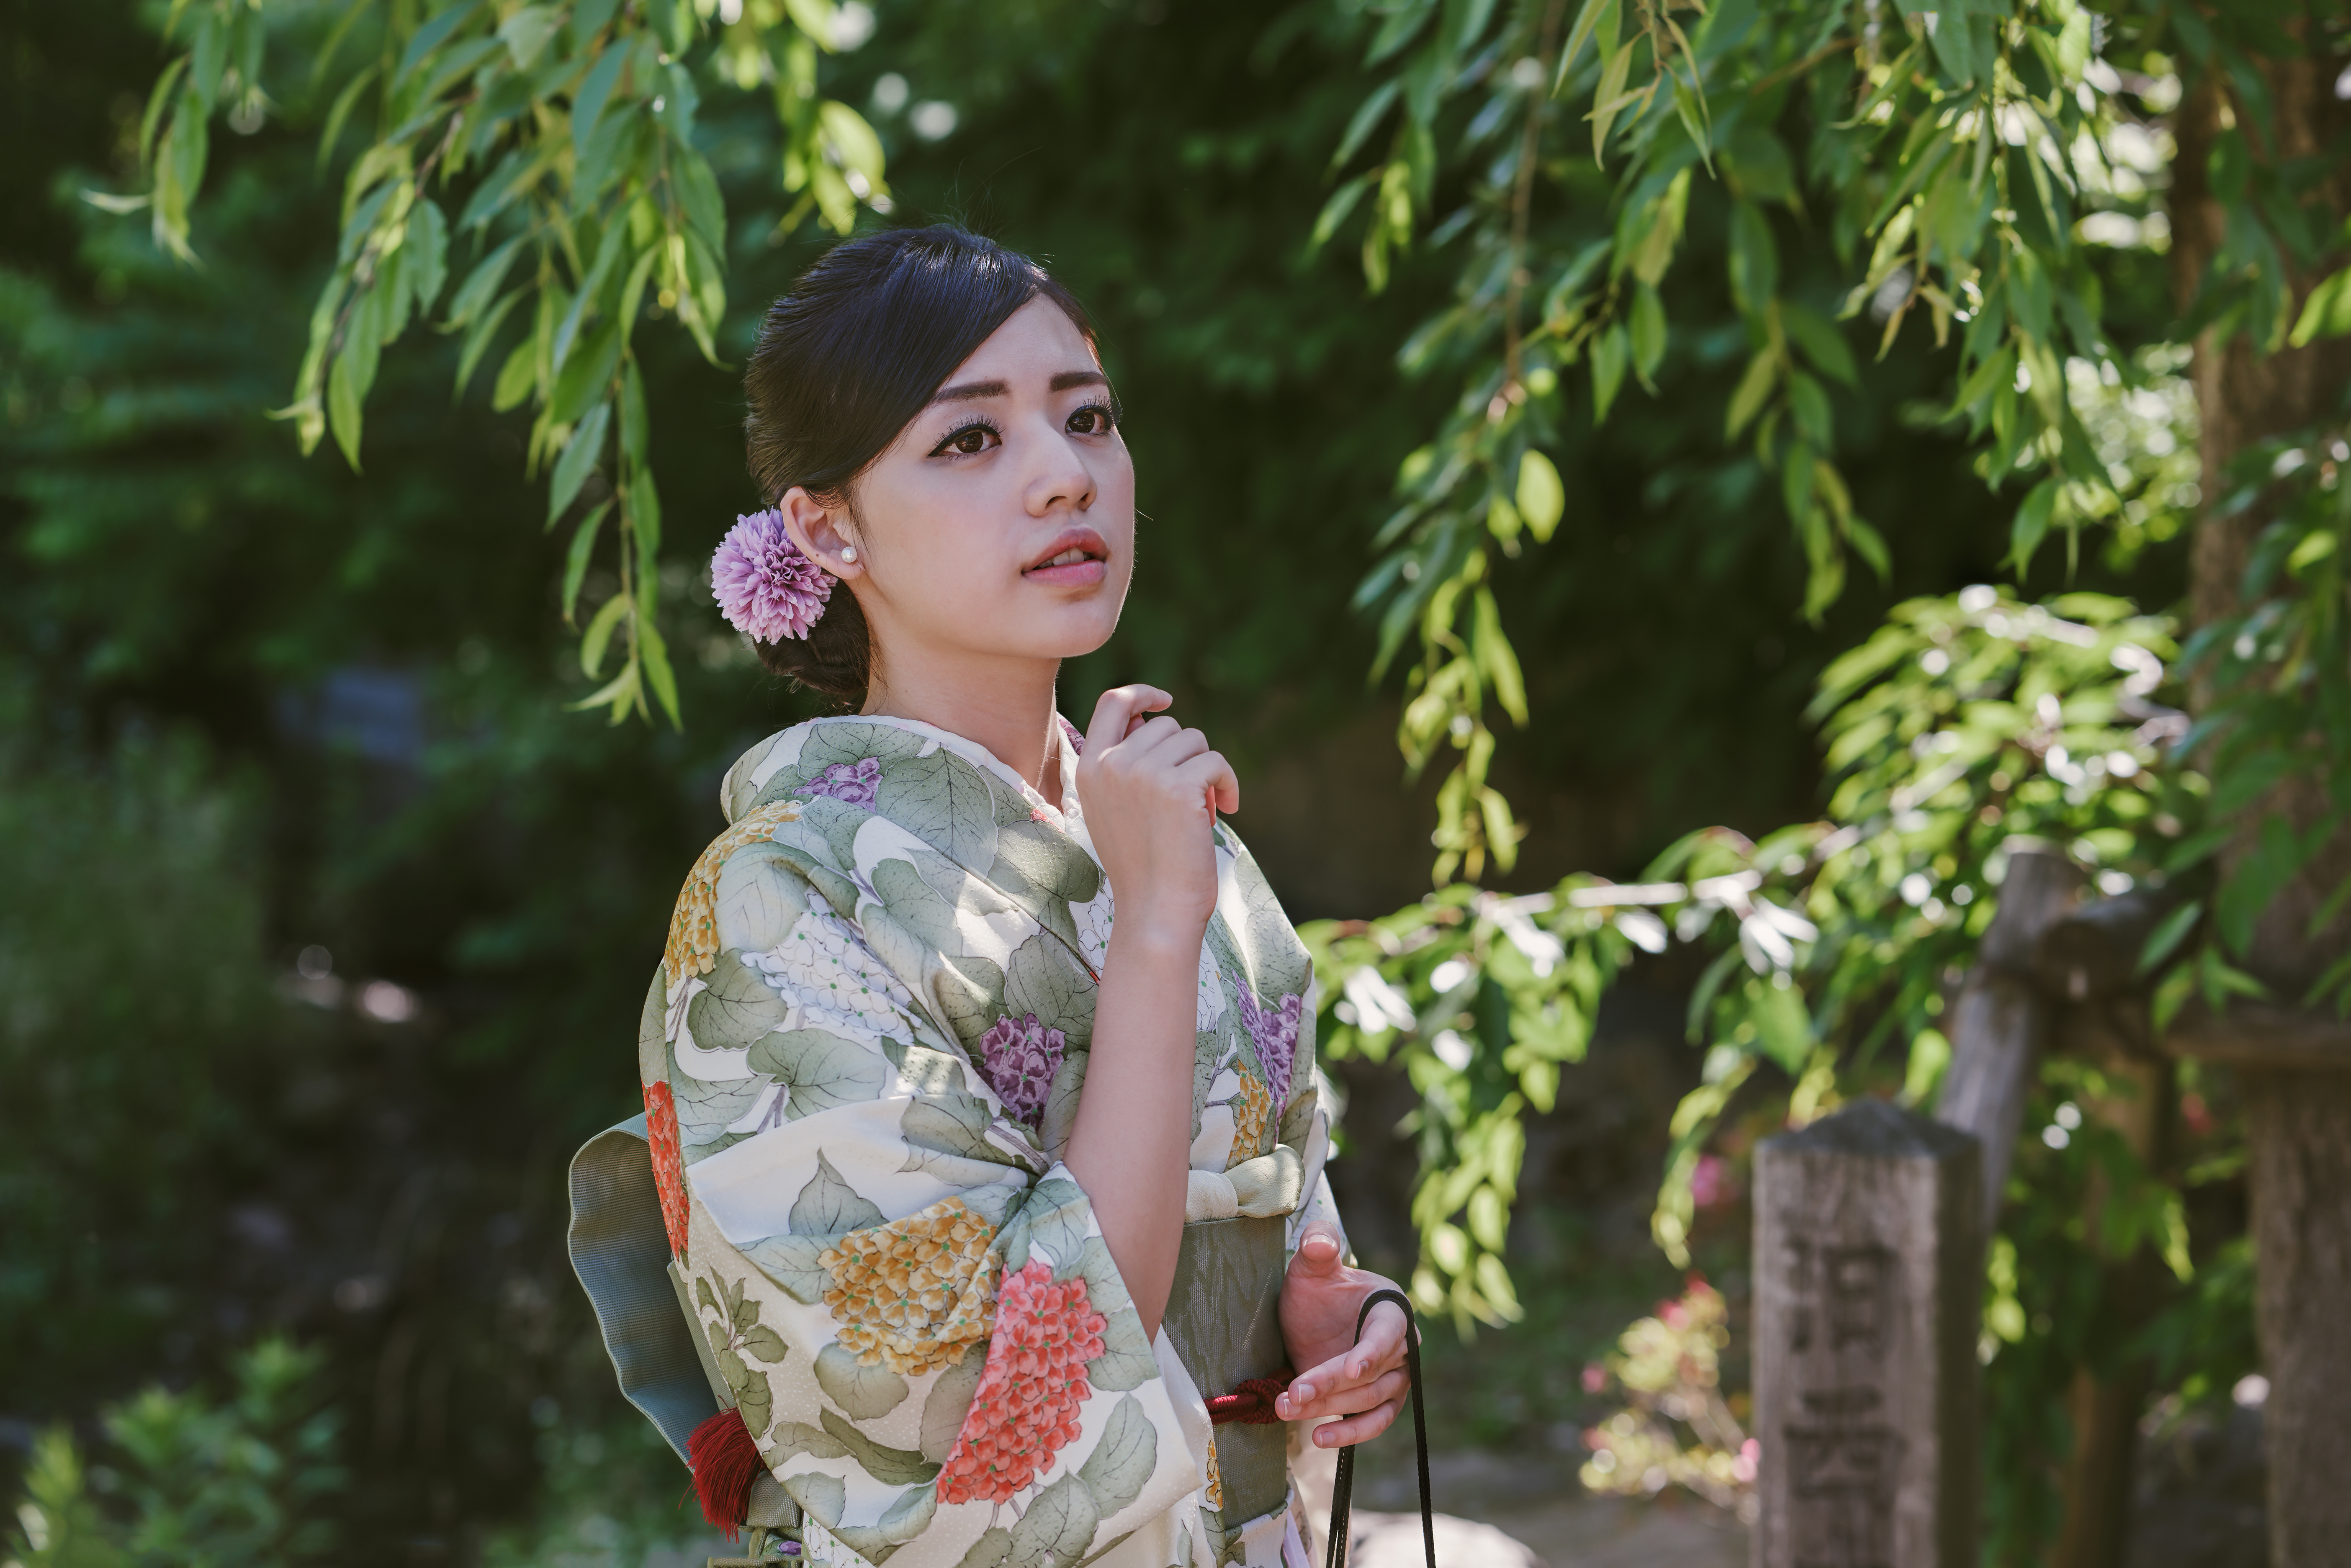 Model Women Brunette Asian Traditional Clothing Flower In Hair Foliage Women Outdoors Looking Away 5616x3746